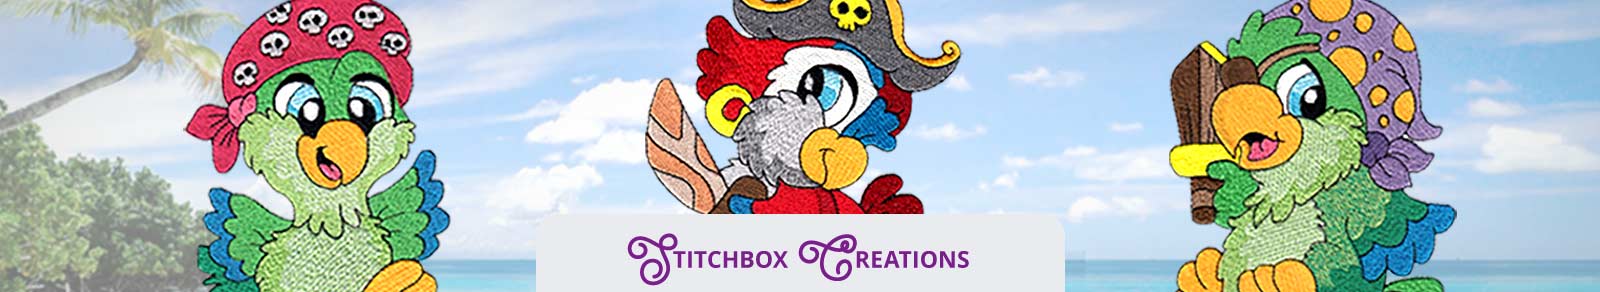 stitchbox creations